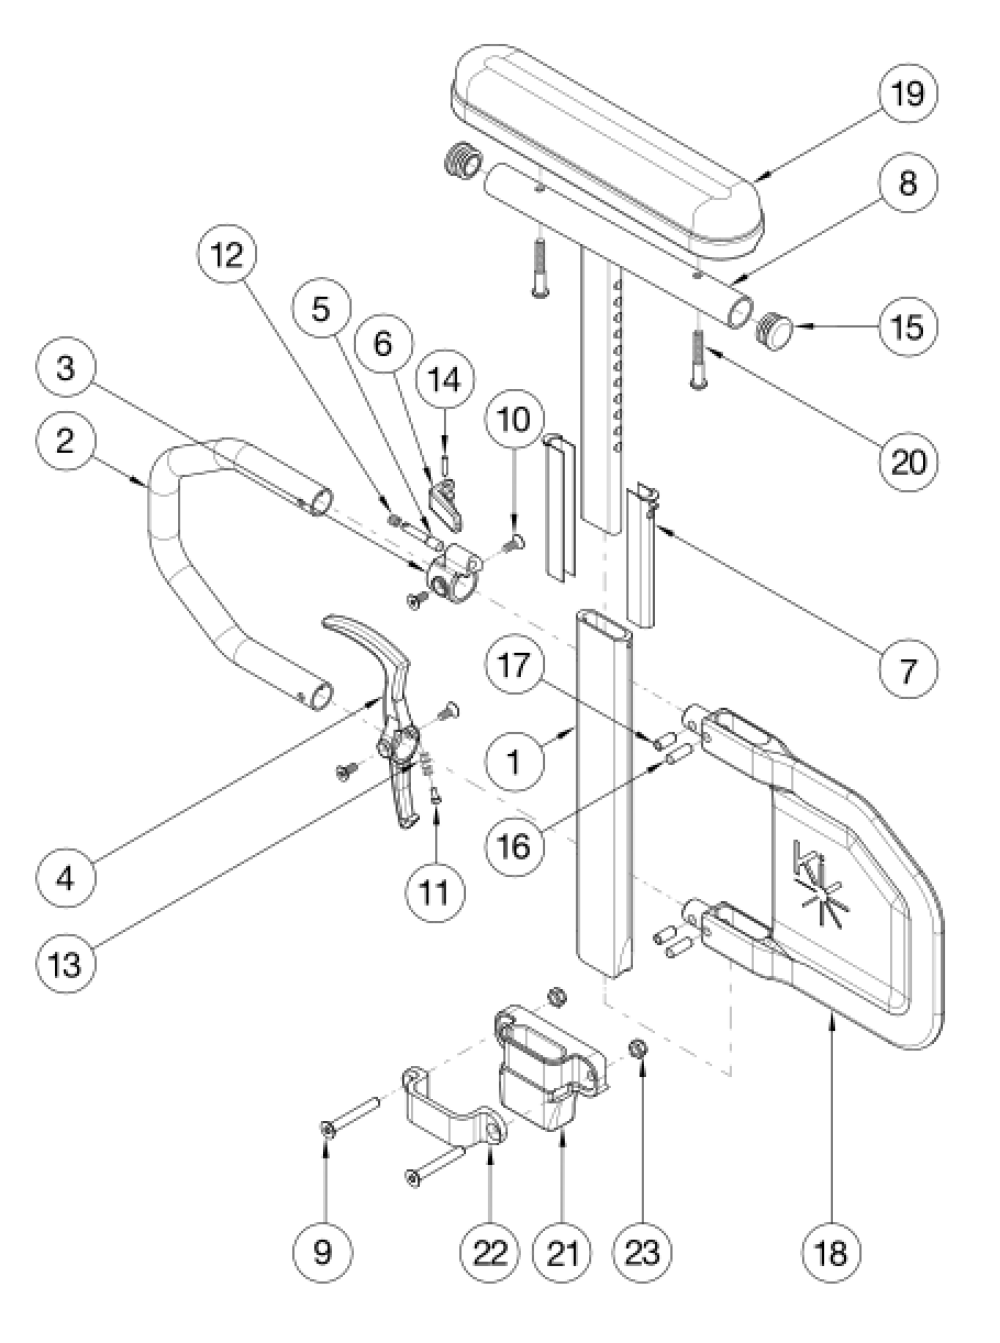 Rogue2 Armrest - Height Adjustable T-arm parts diagram